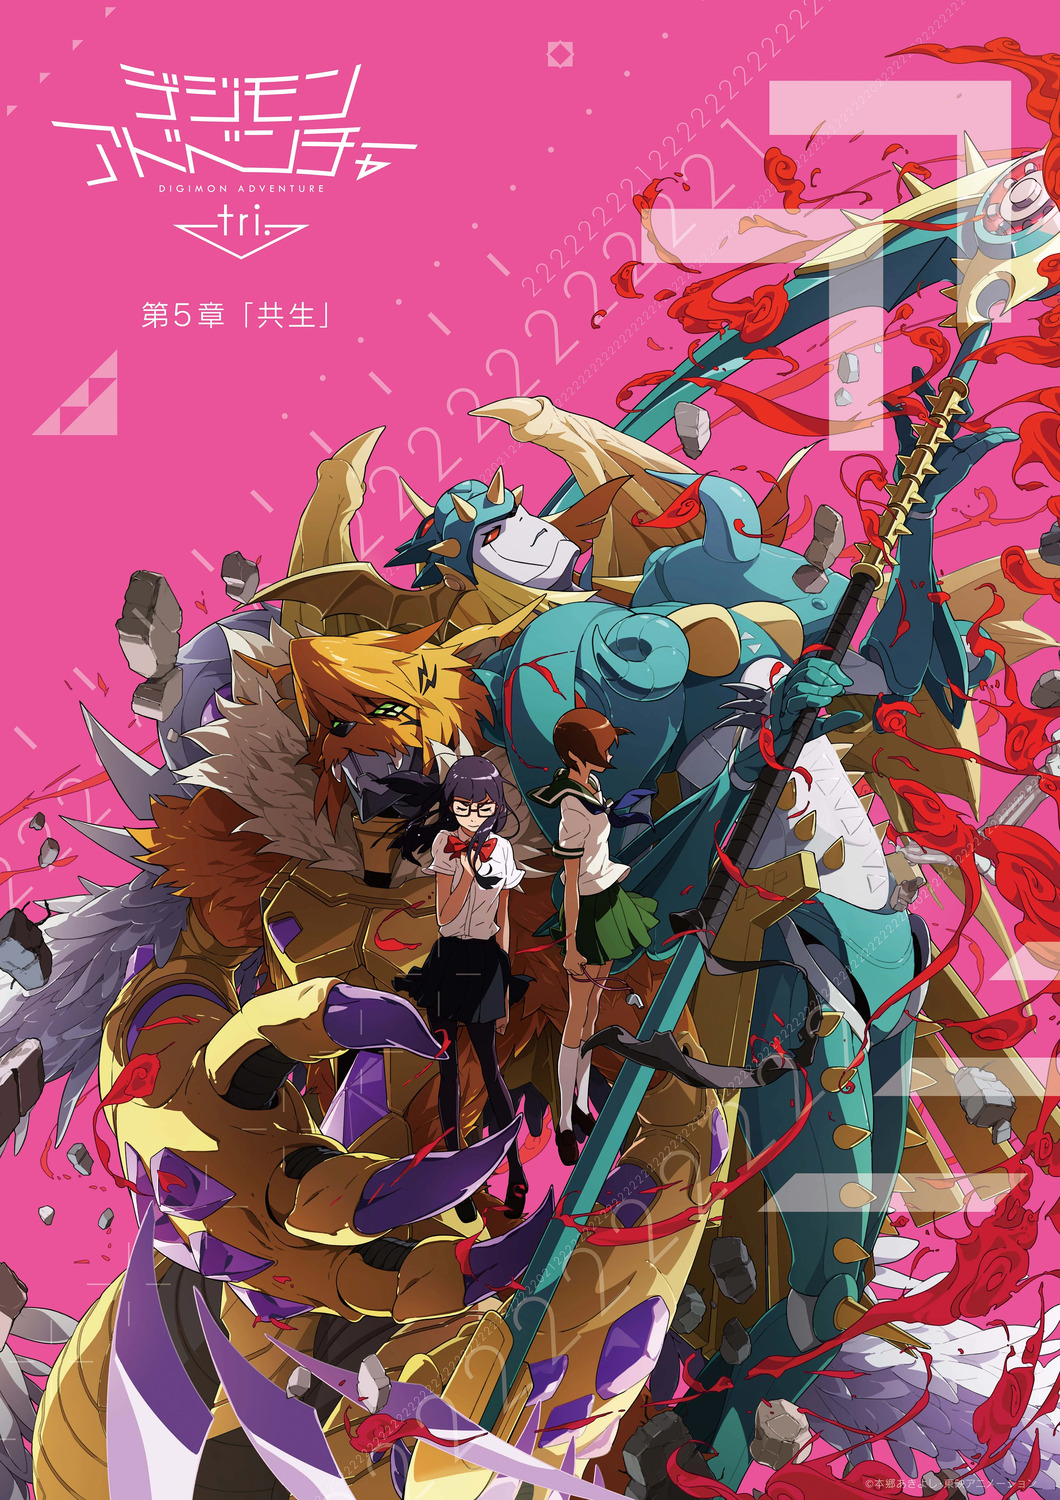 Extra Large Movie Poster Image for Digimon Adventure tri. 5: Kyôsei 